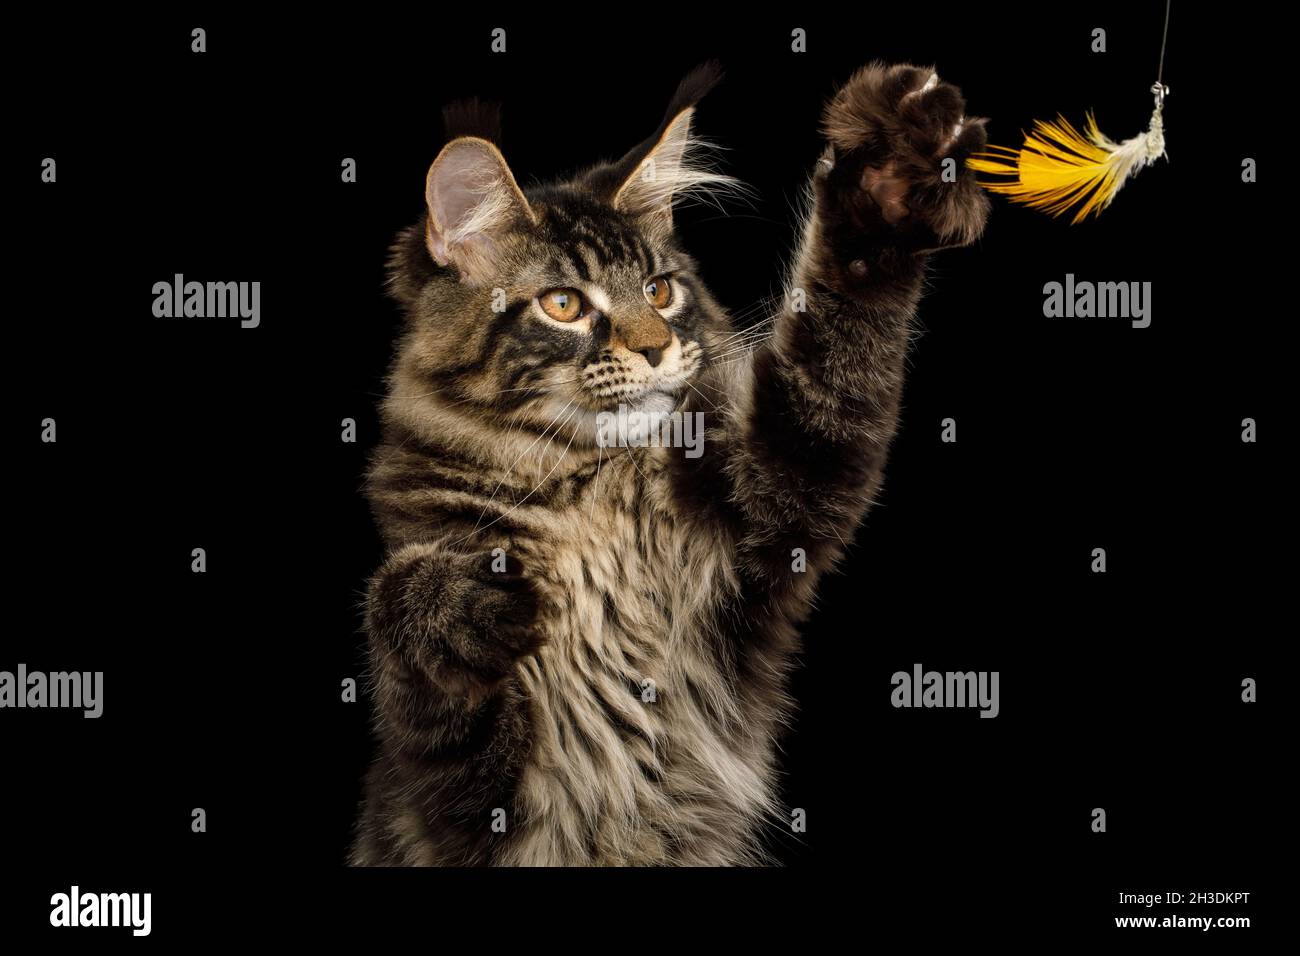 Retrato de Maine Coon Cat levantando la pata, coger el juguete, aislado sobre fondo negro Foto de stock